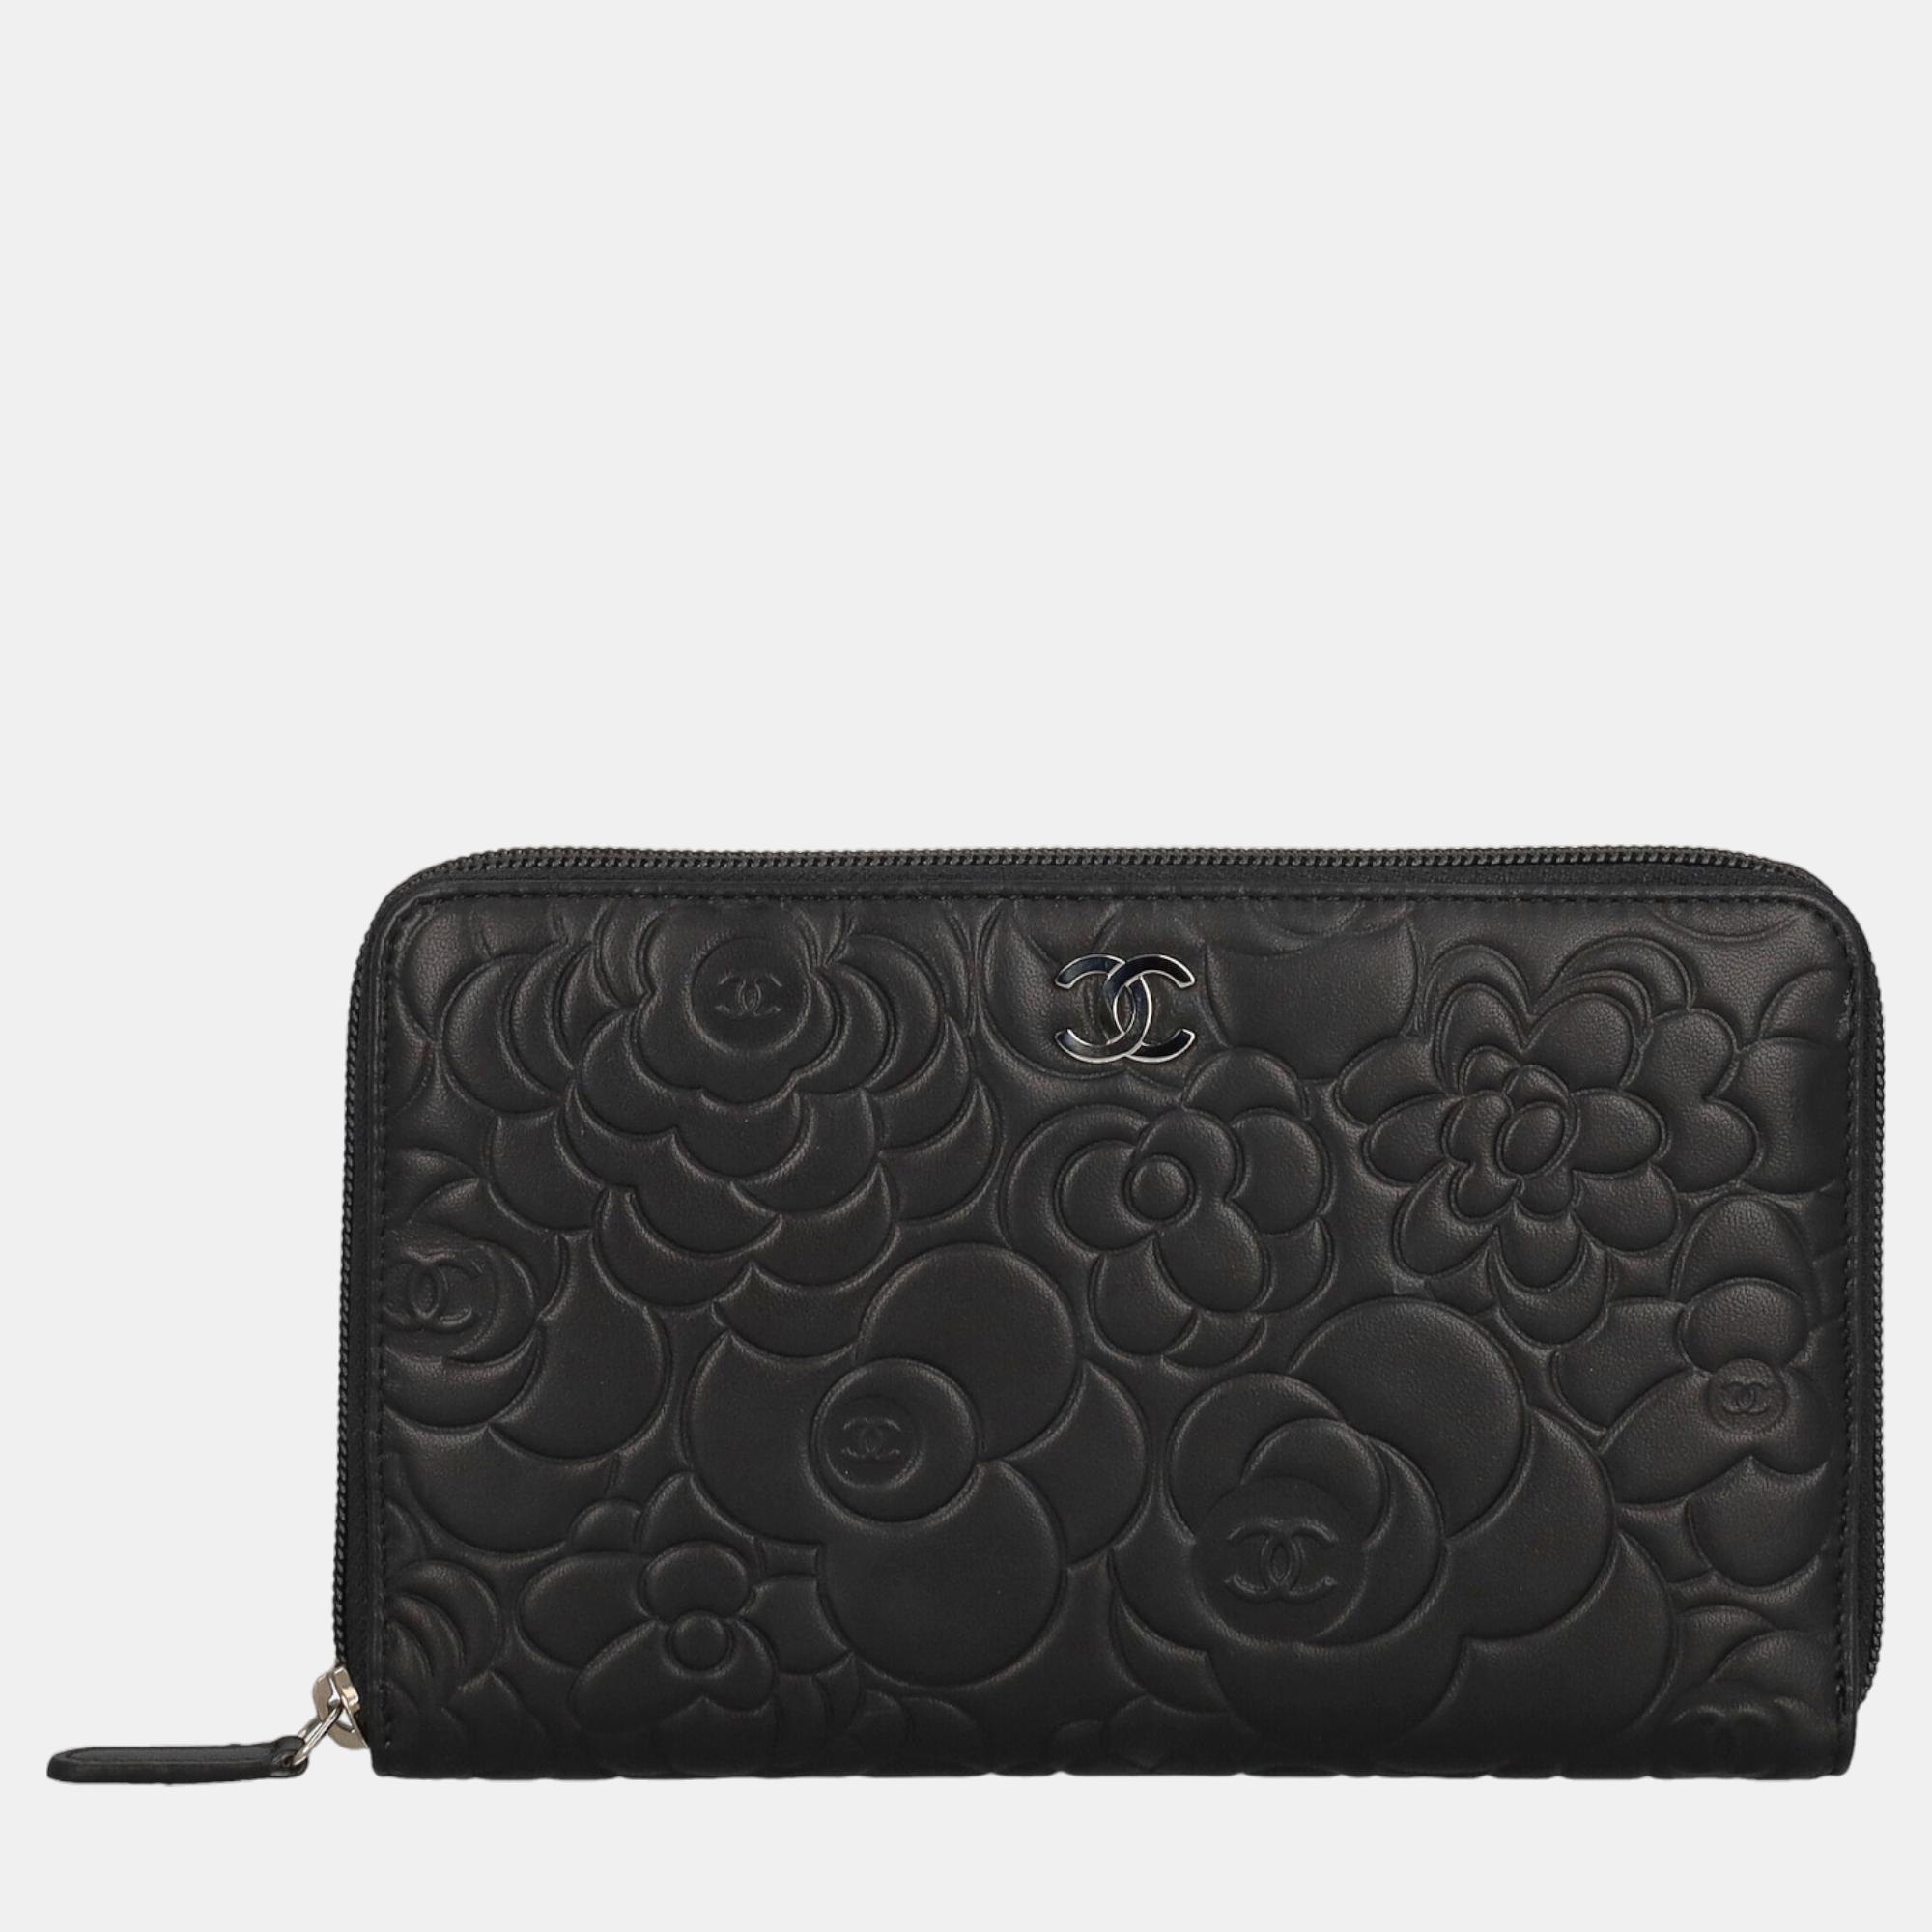 Chanel  Women's Leather Wallet - Black - One Size